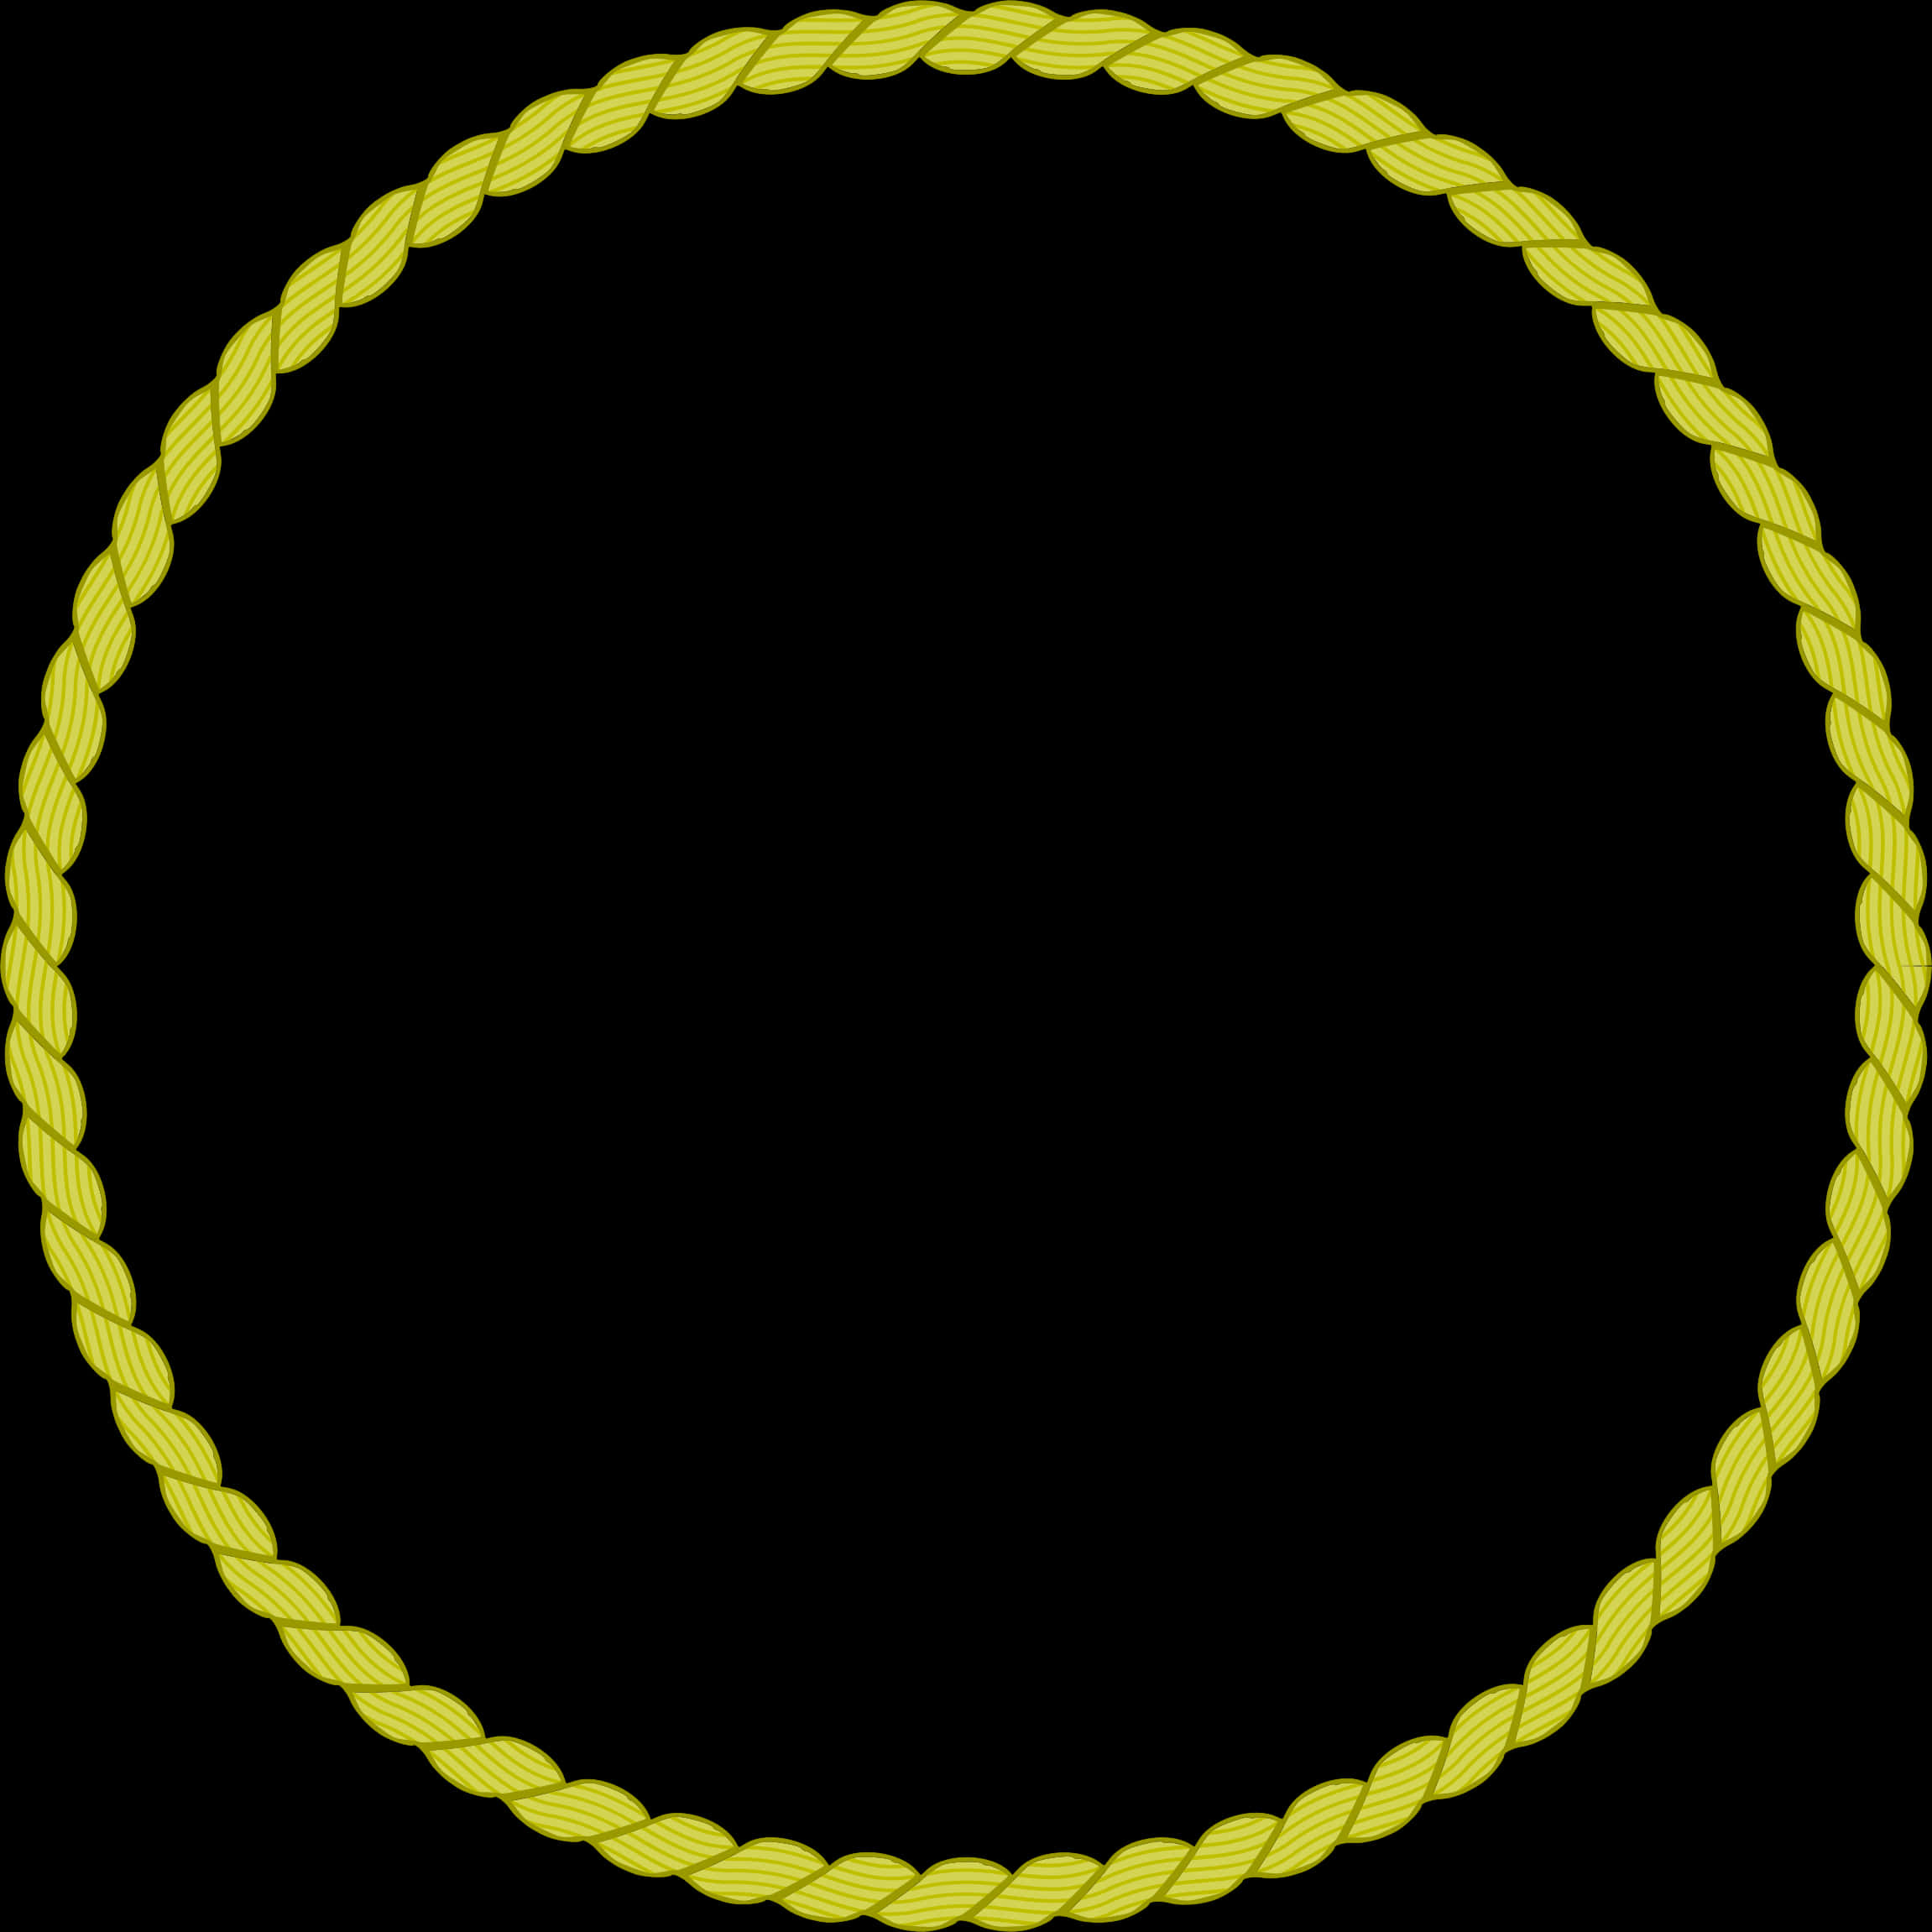 Golden Rope Circle Frame PNG image